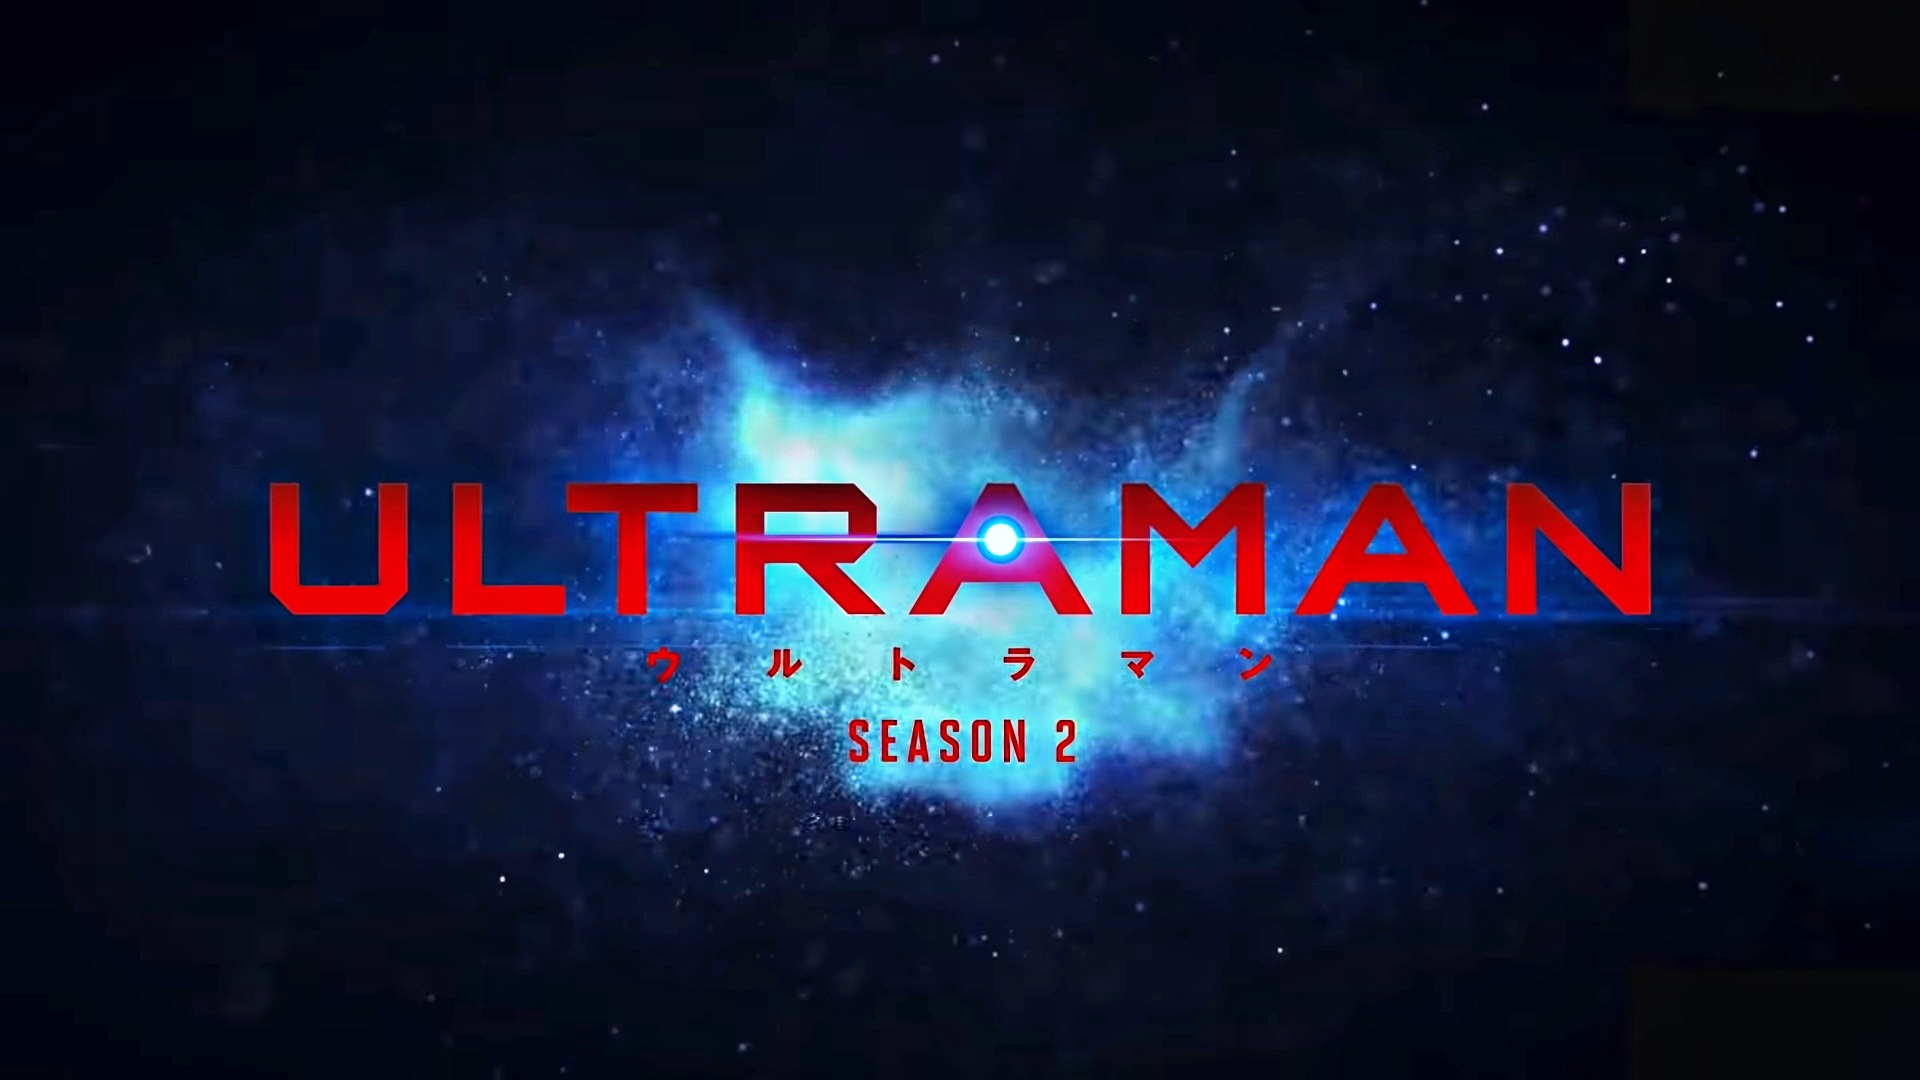 Ultraman Season 2 Release Date Confirmed By Netflix - The Teal Mango